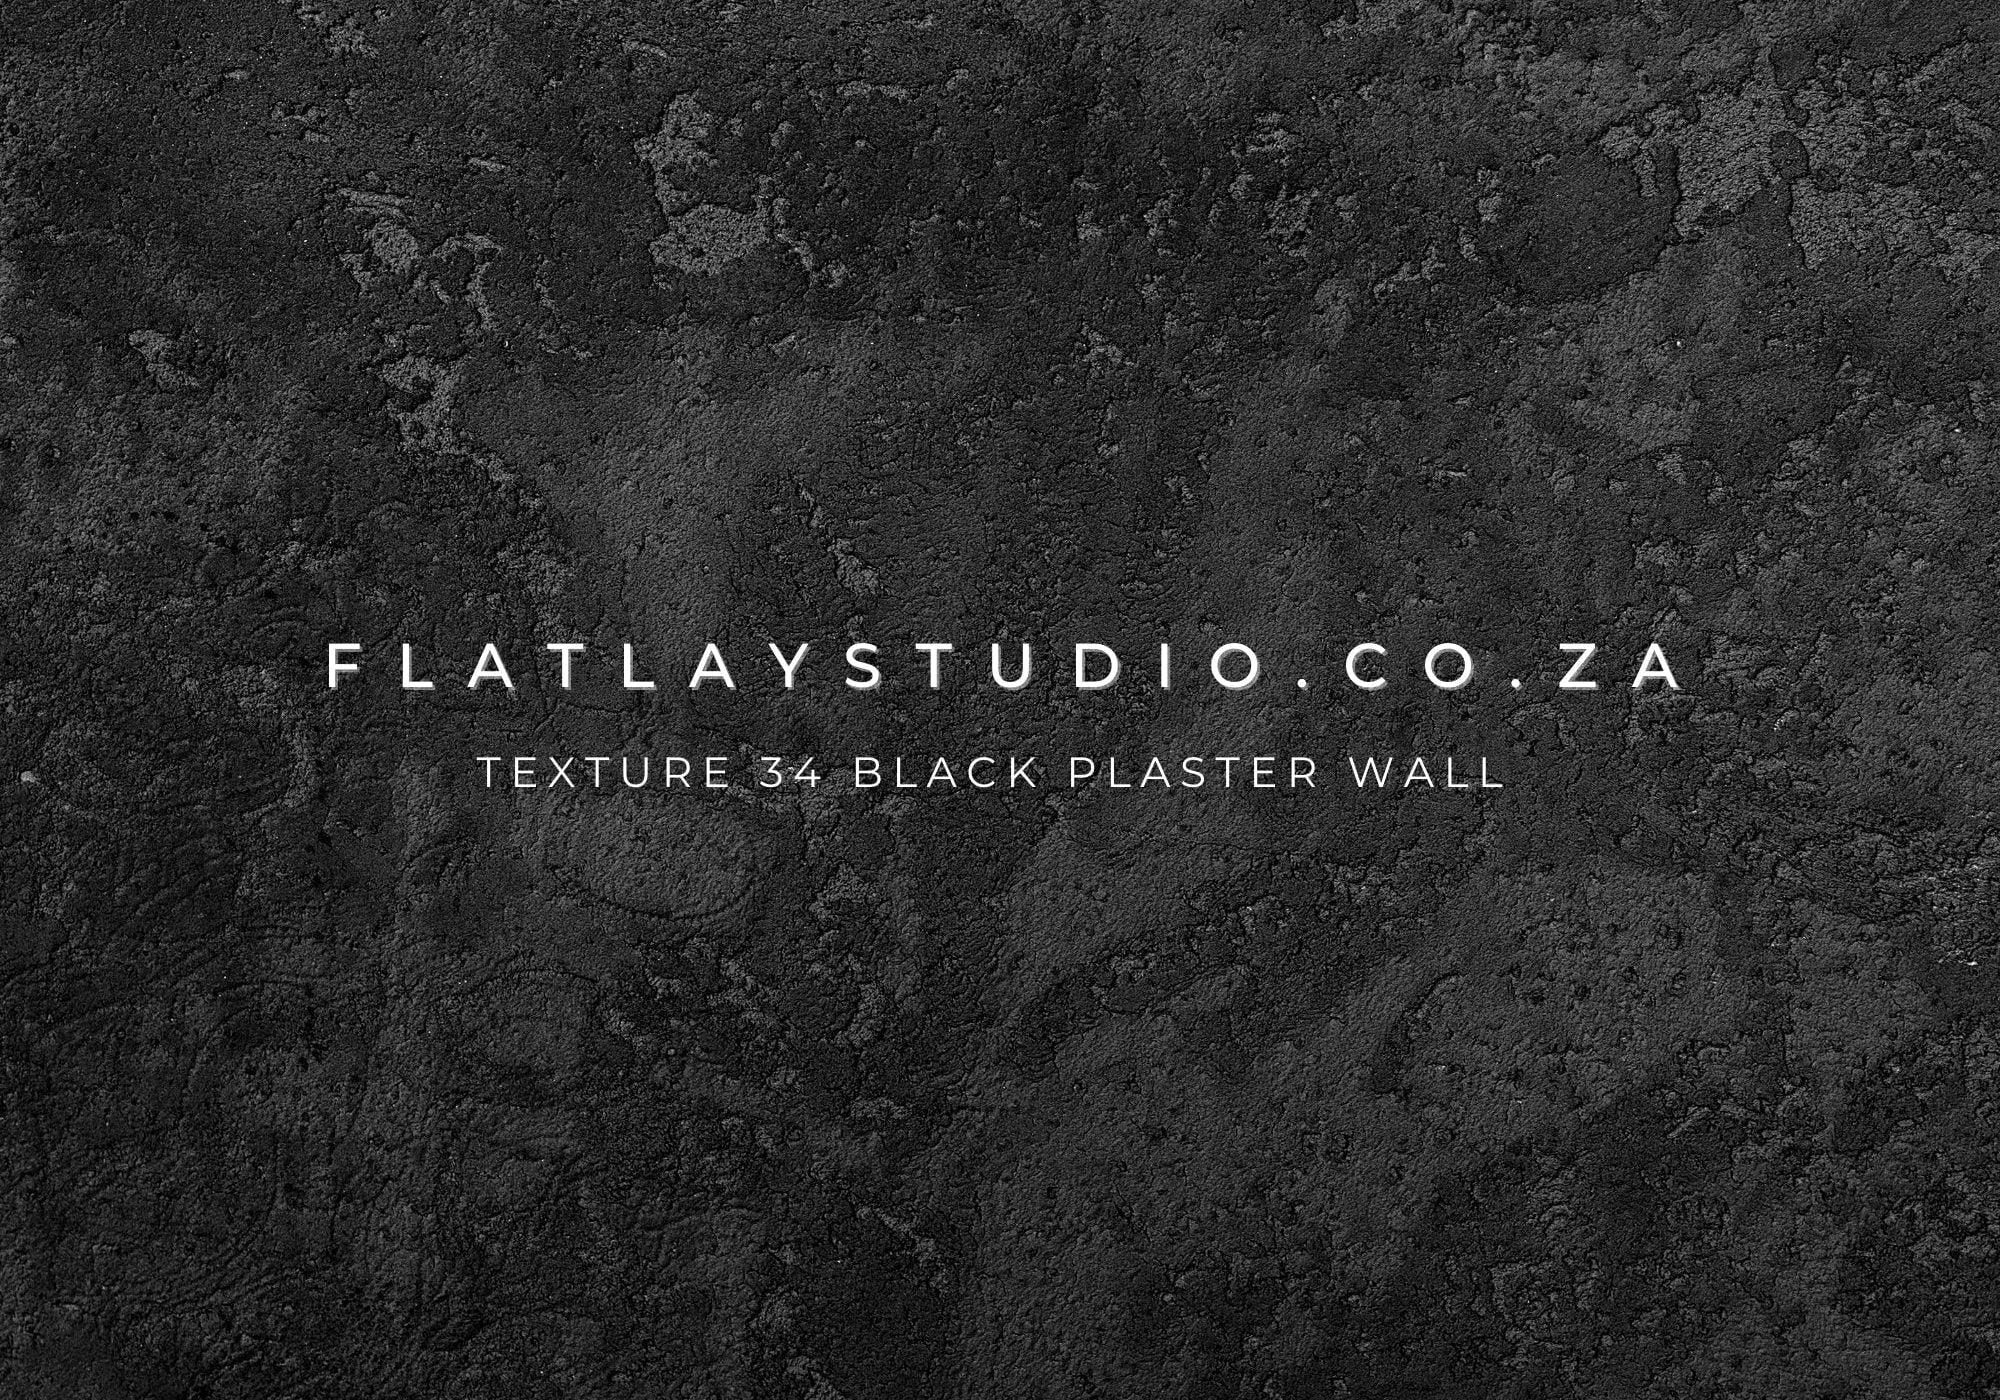 Texture 34 Black Plaster Wall - FlatlayStudio